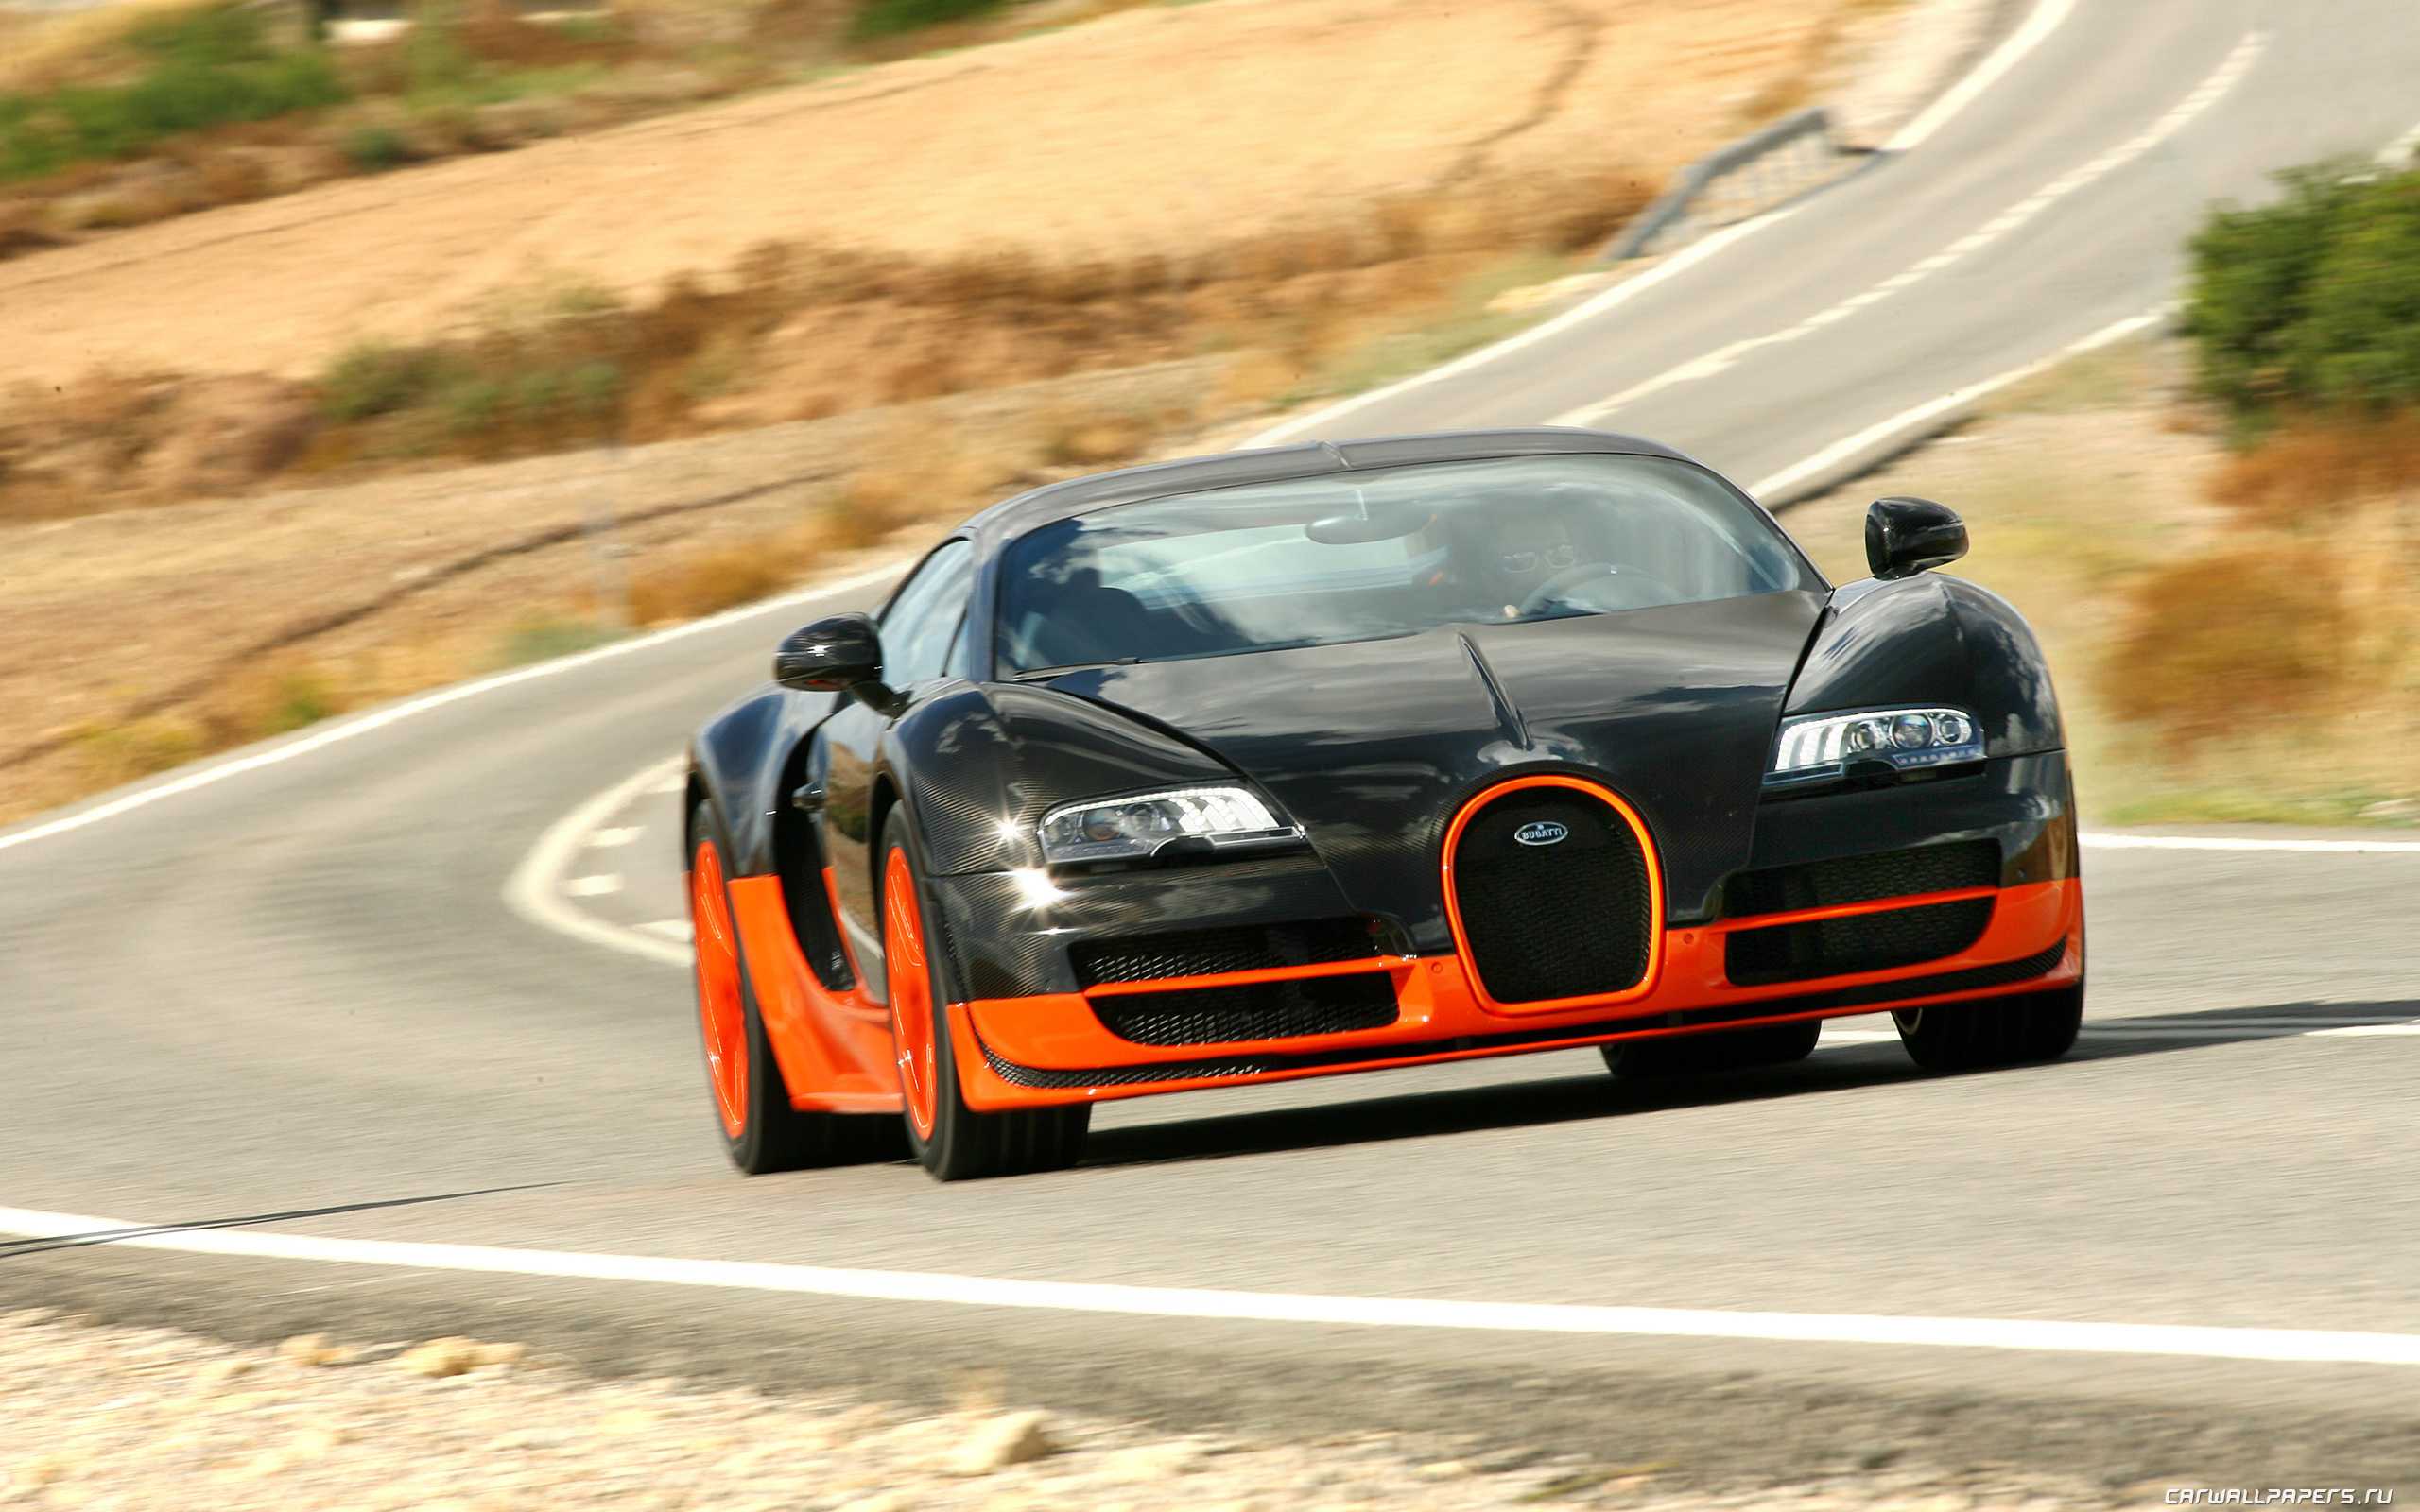 Фото быстрых машин. Машина Bugatti Veyron 16.4 Supersport. Bugatti Veyron 16.4 super Sport 2010. Машина Bugatti Veyron super Sport. Bugatti Veyron 16.4 super Sport Black.